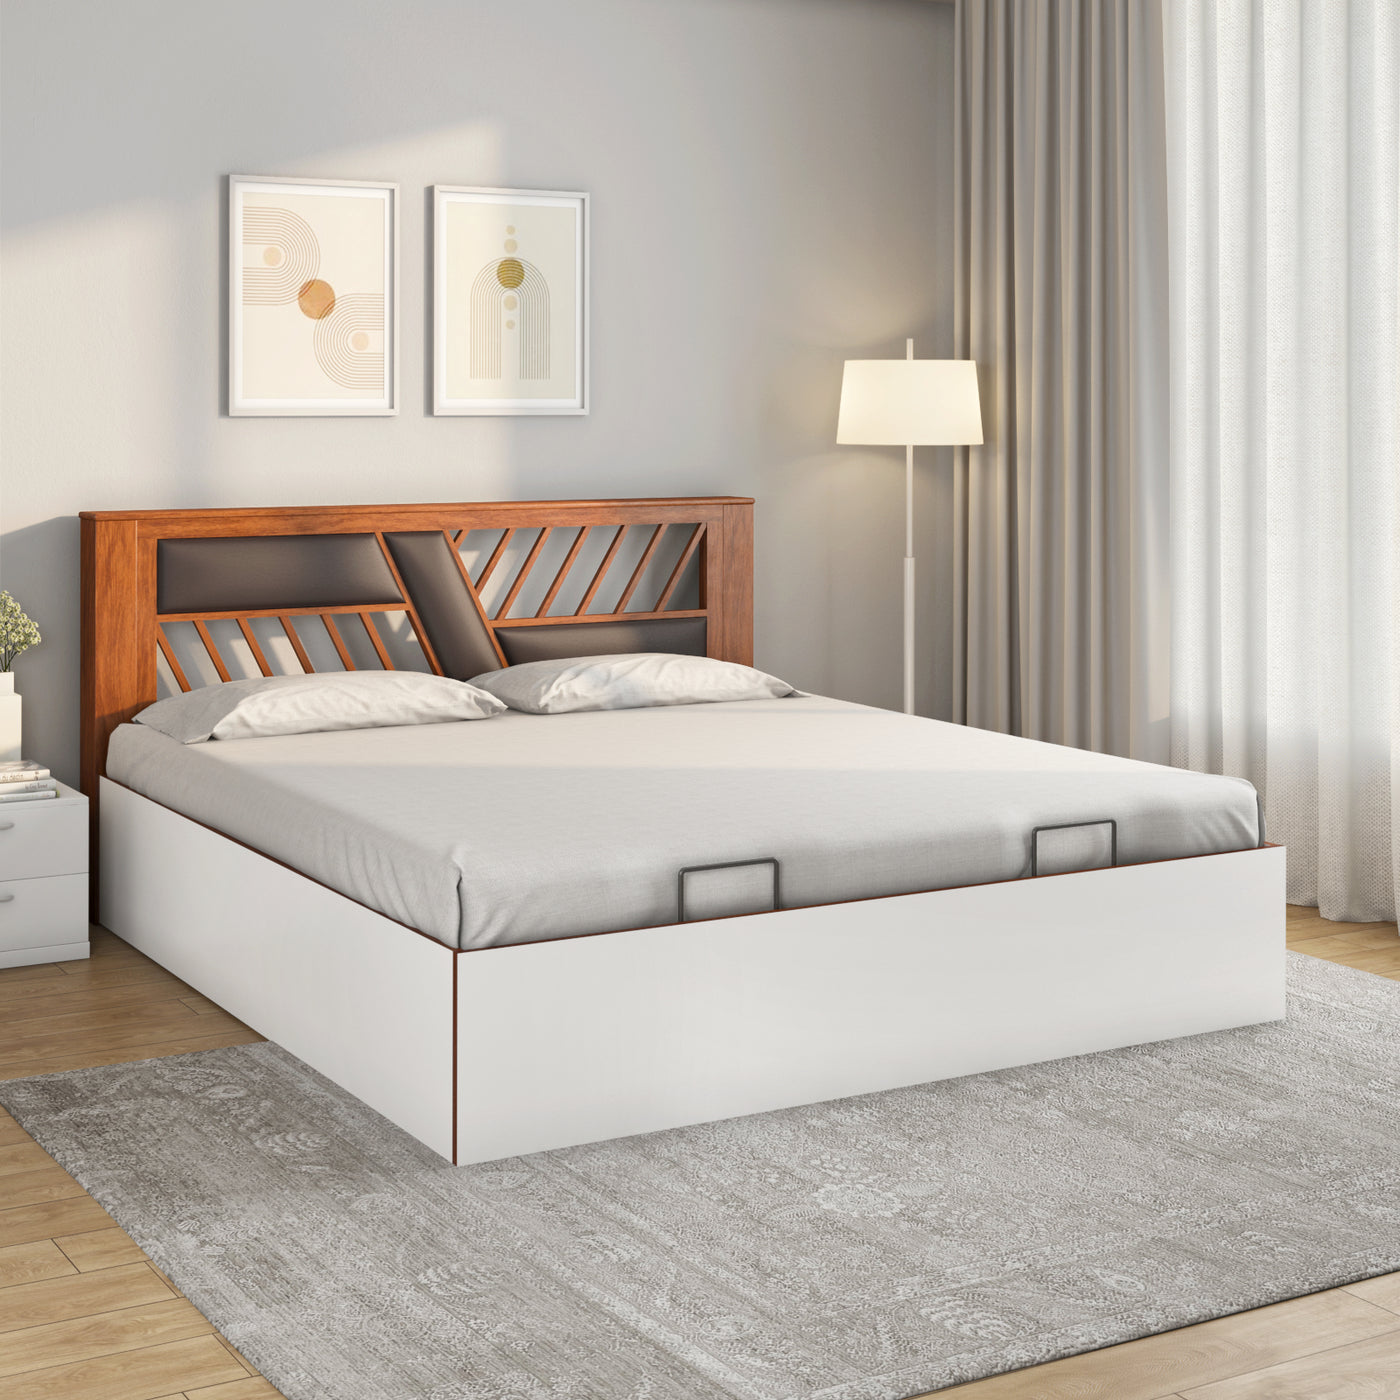 Nilkamal Zion Prime Bed With Semi Hydraulic Storage (White)